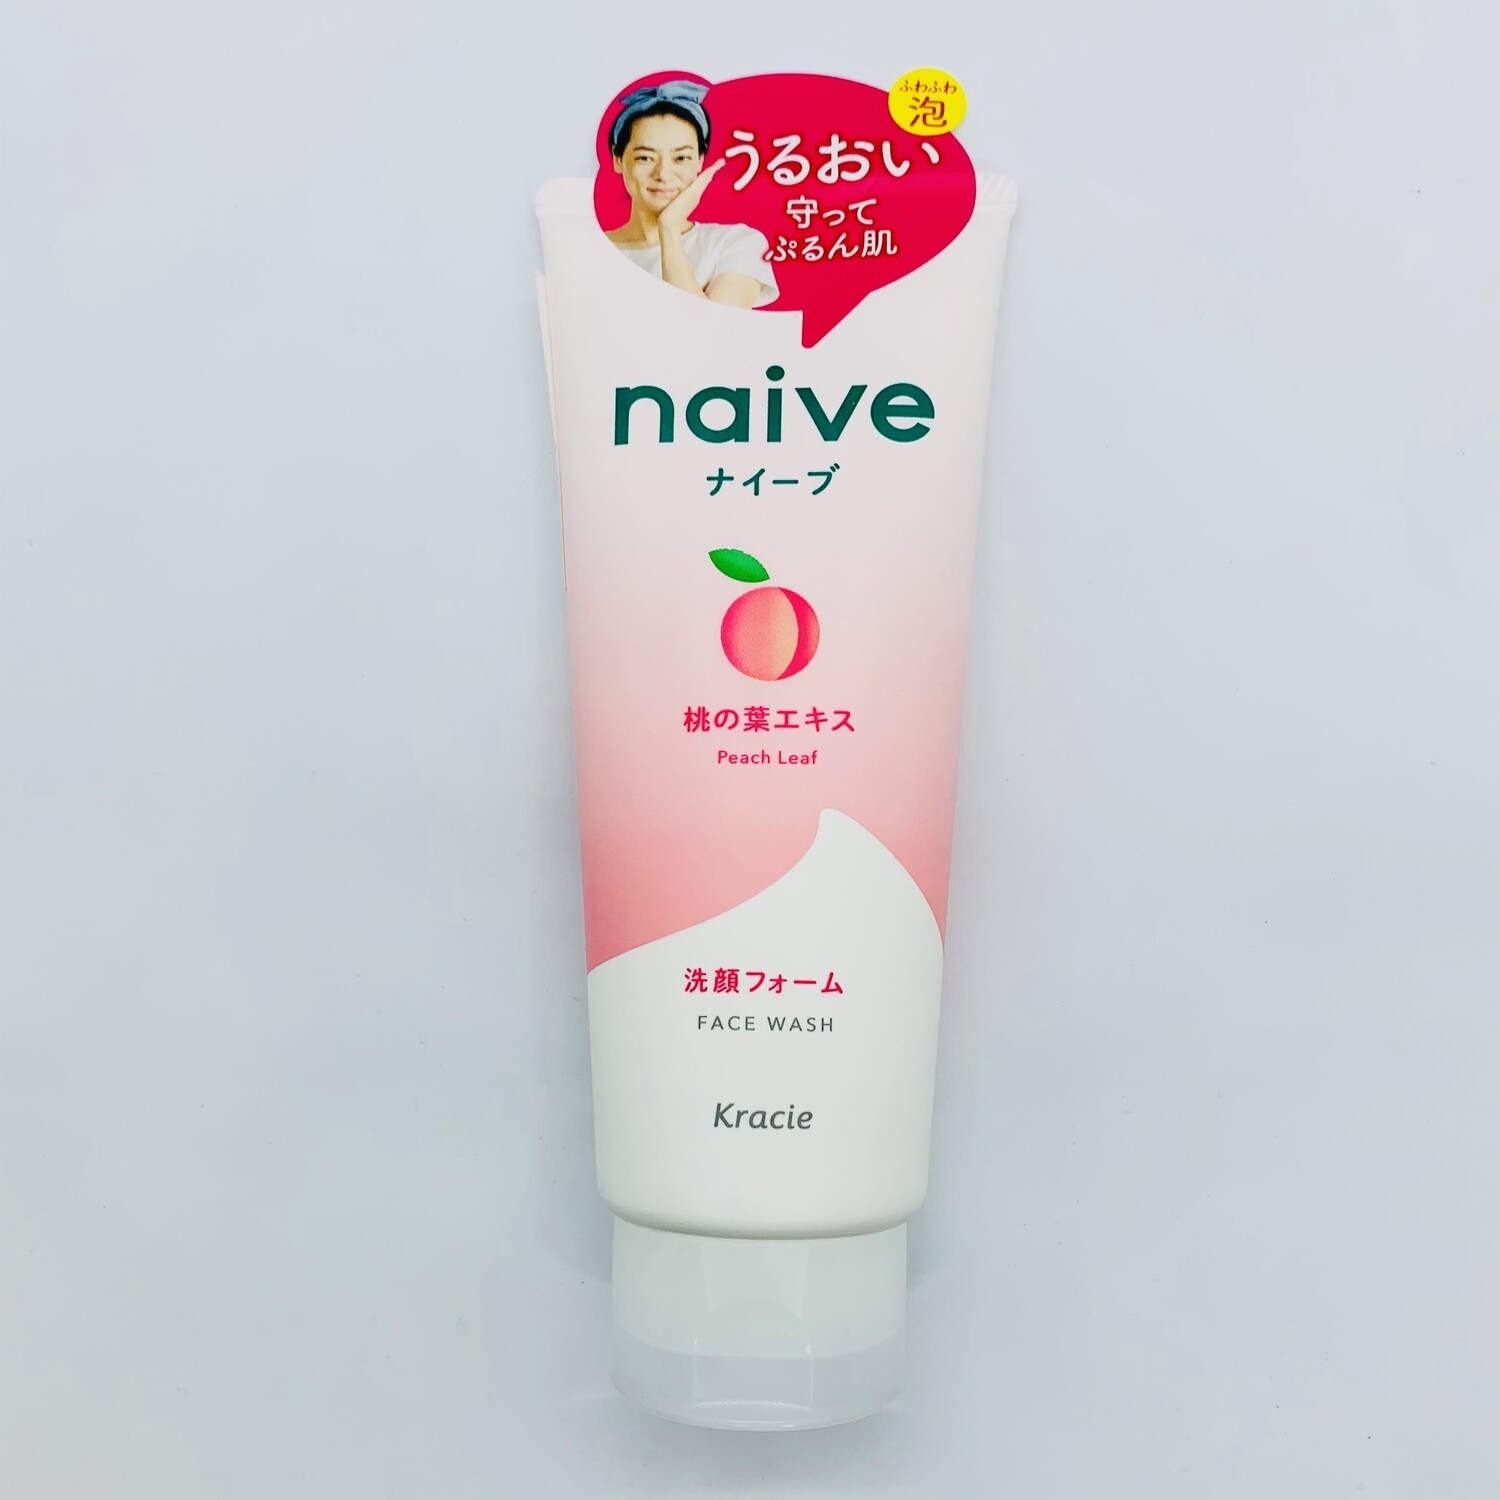 Naive Face Wash Peach